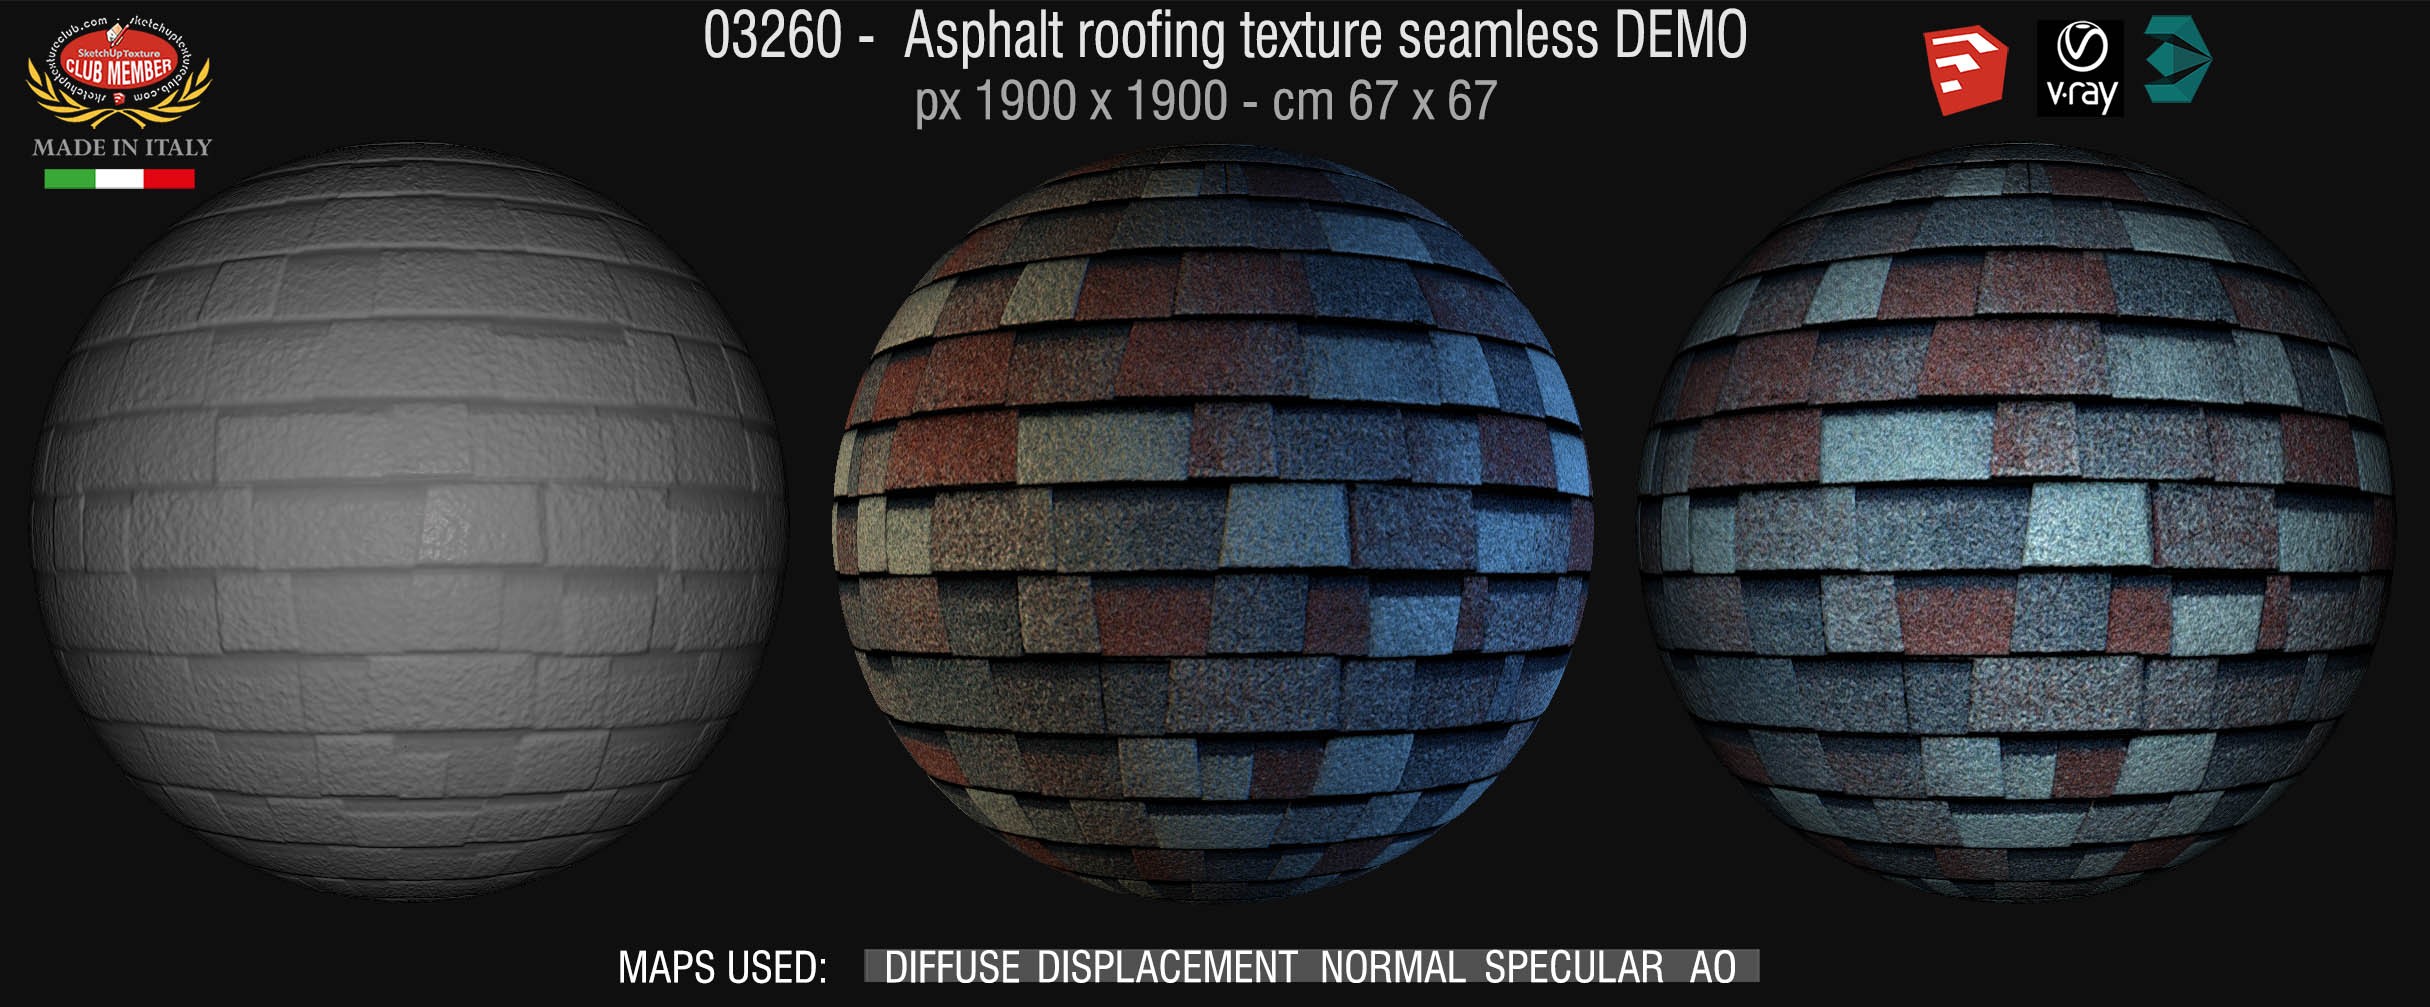 03260 Asphalt roofing texture seamless + maps DEMO